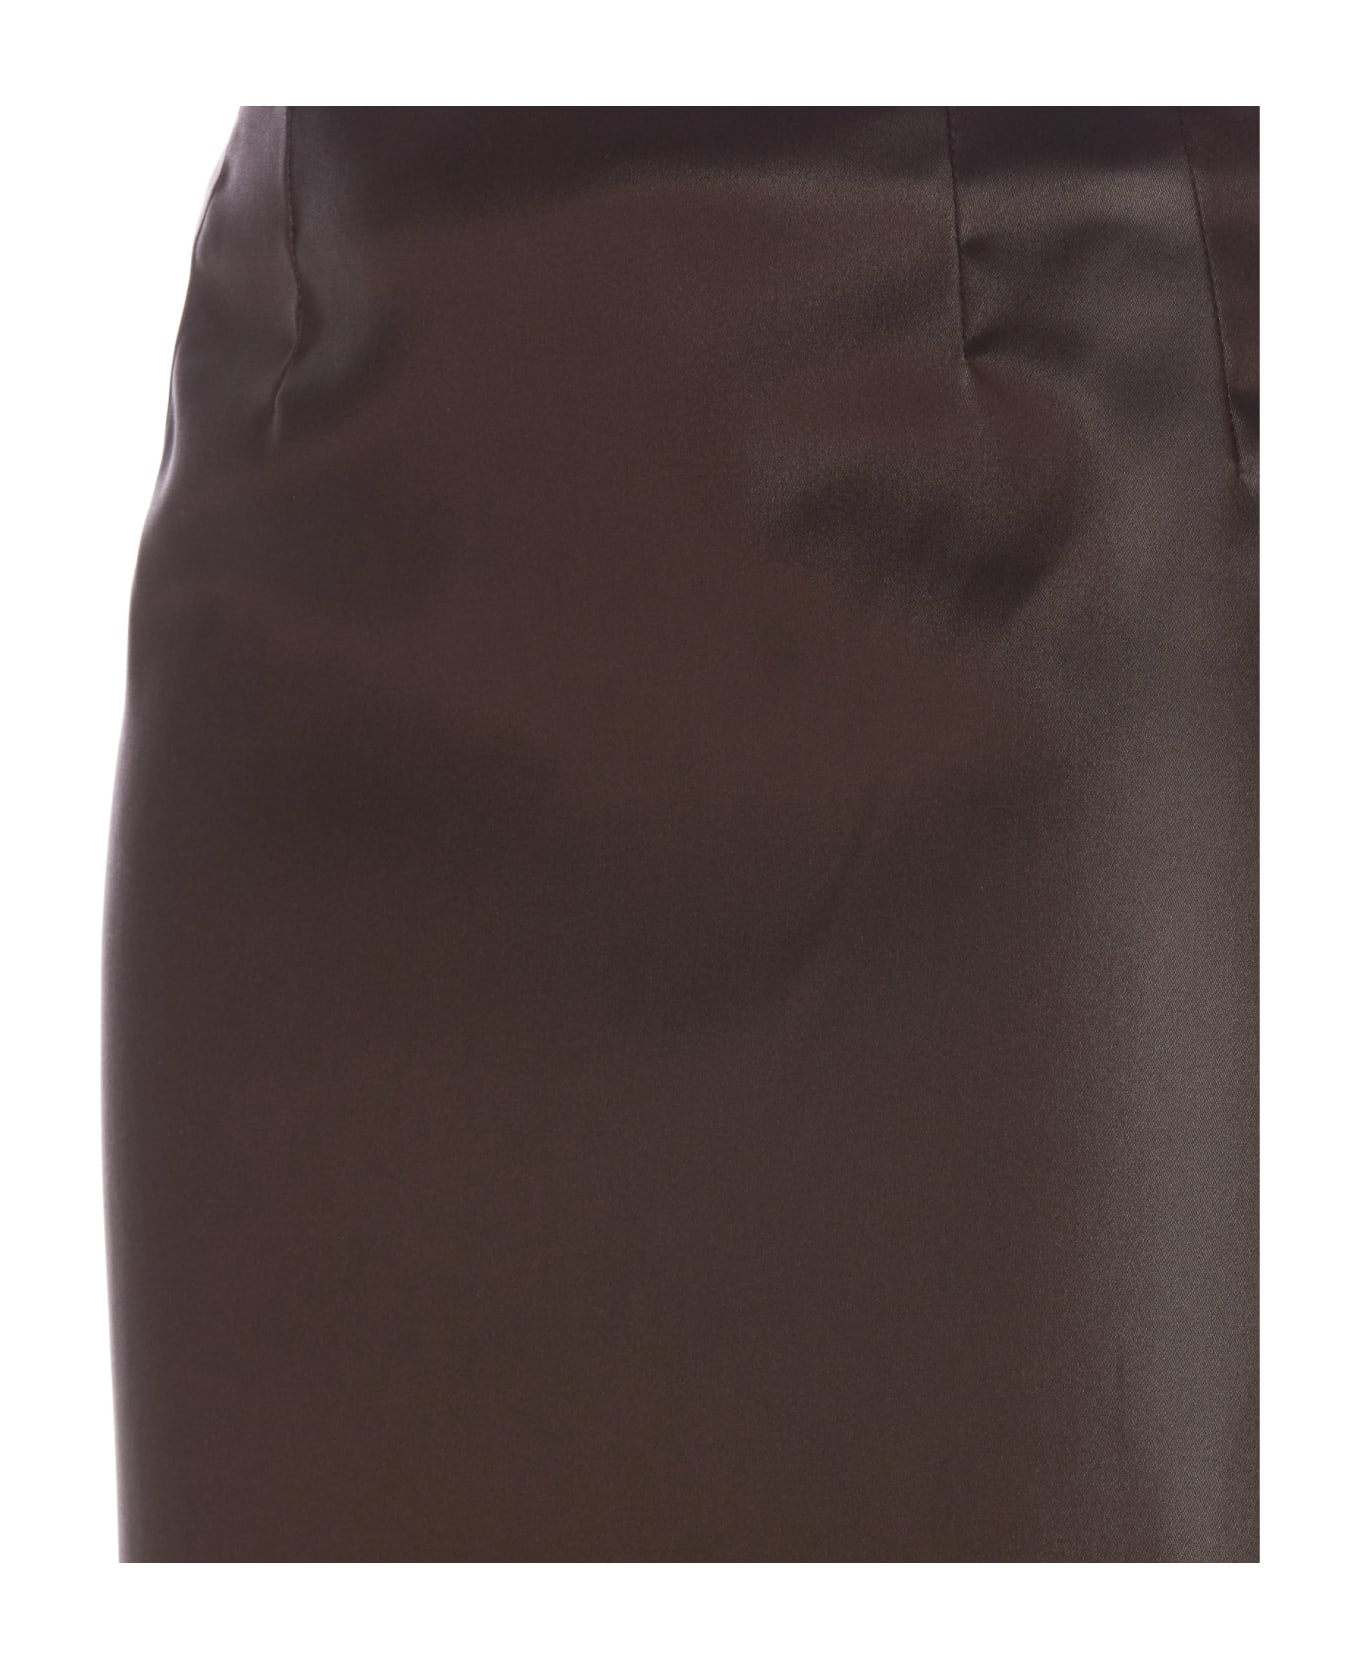 Dolce & Gabbana Acetate Skirt - Brown